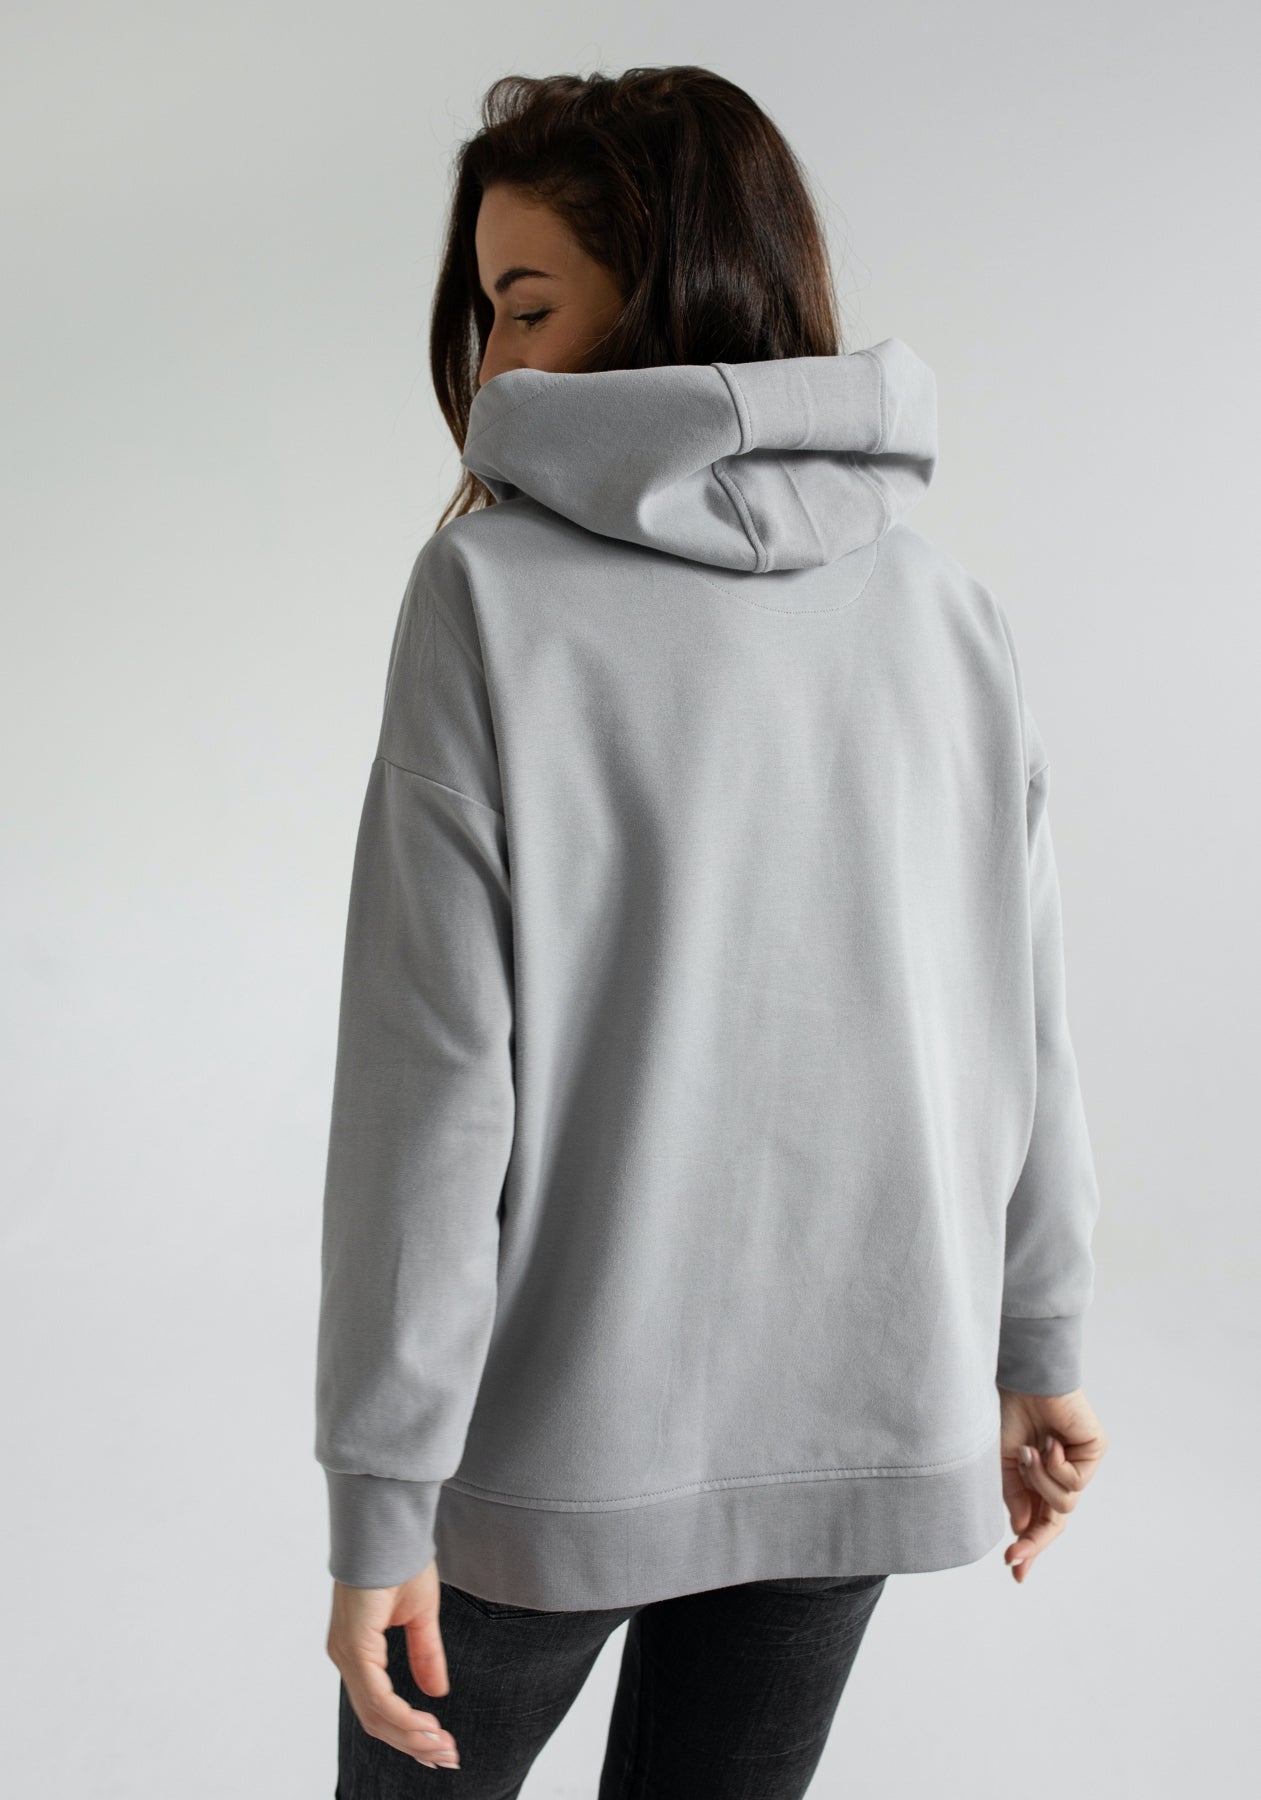 Women hoodie organic cotton Light gray - Oversized